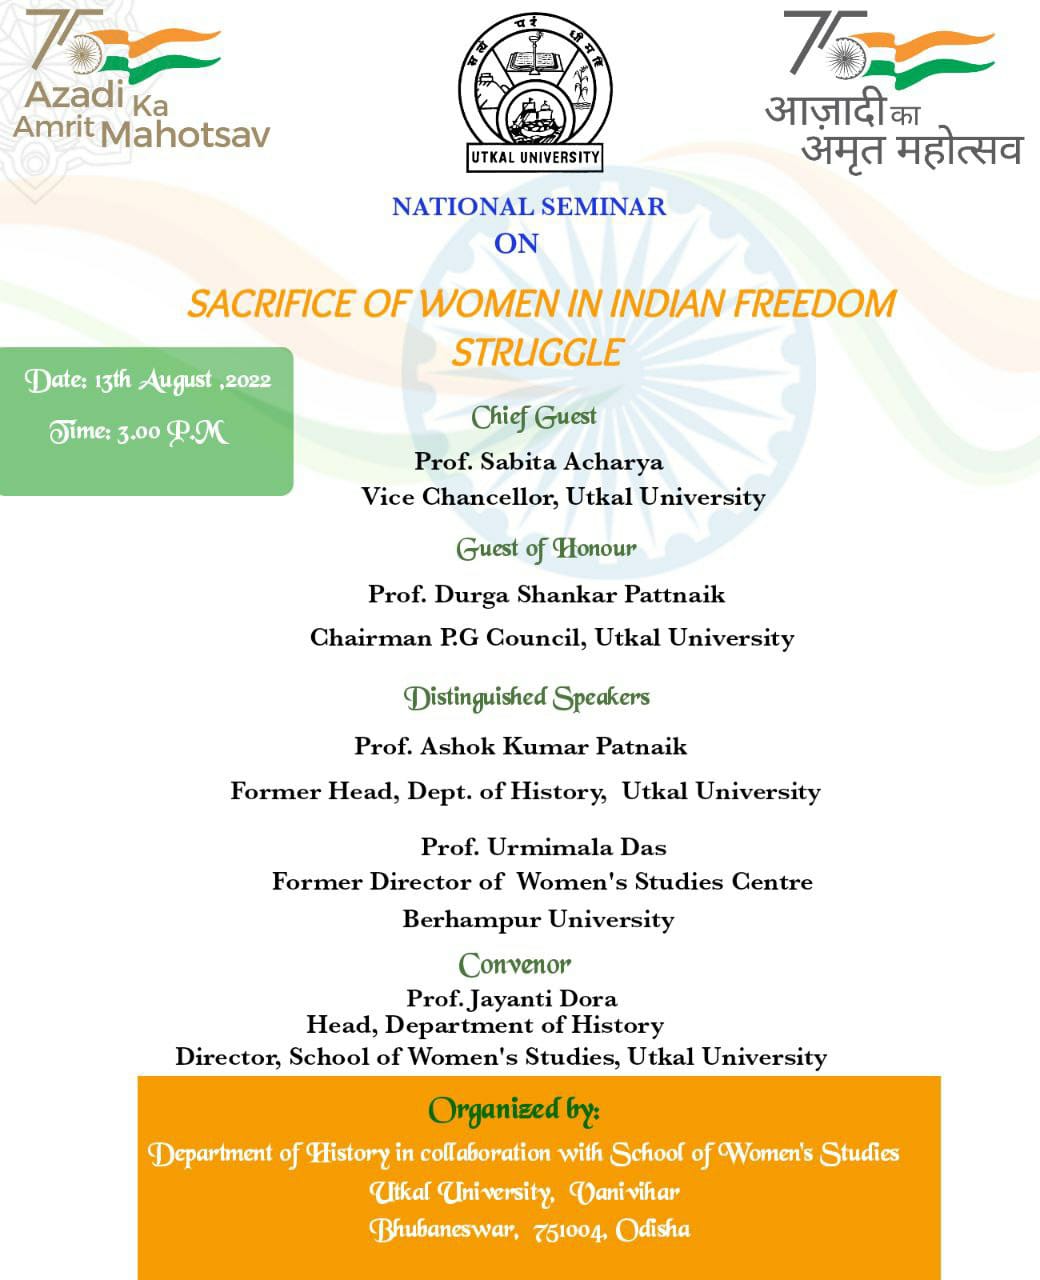 National seminar on Sacrifice of Women in Indian Freedom Struggle